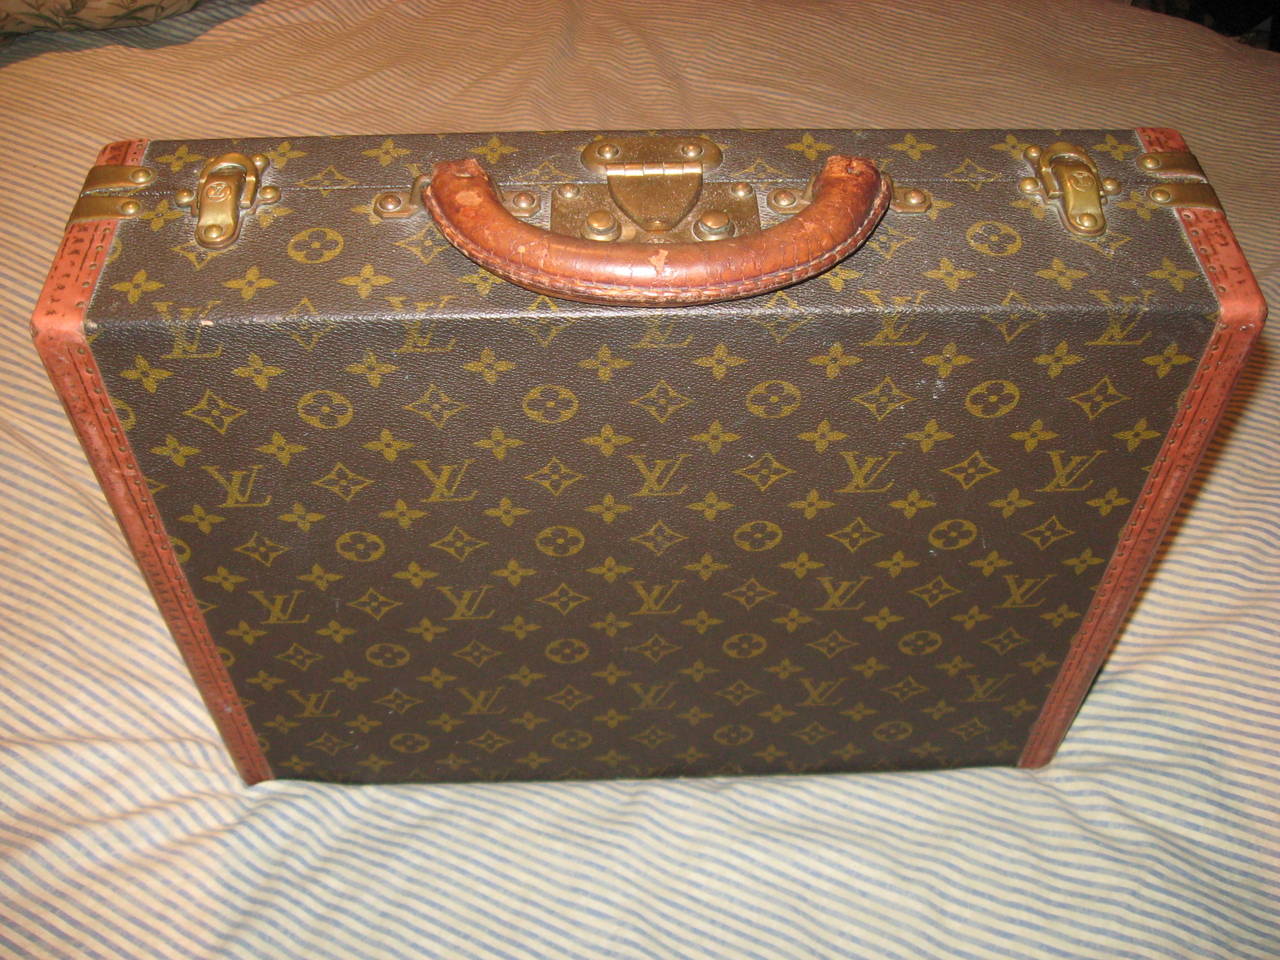 Louis Vuitton Vintage Briefcase at 1stdibs